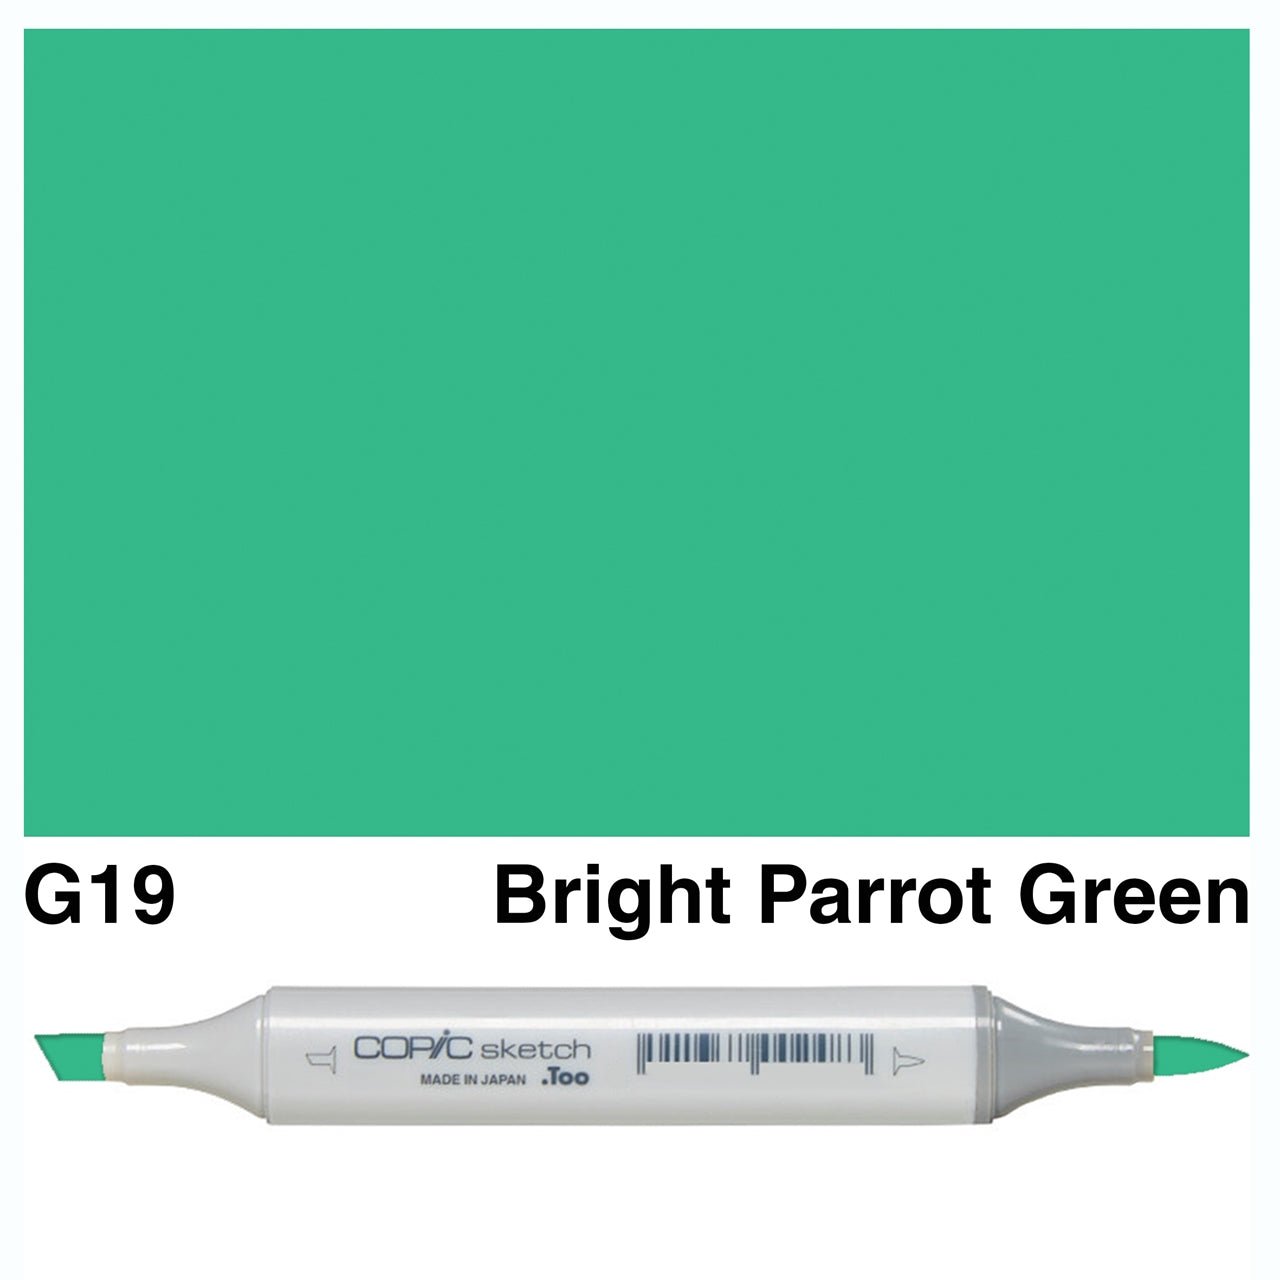 Copic Sketch G19 Bright Parrot Green - theartshop.com.au